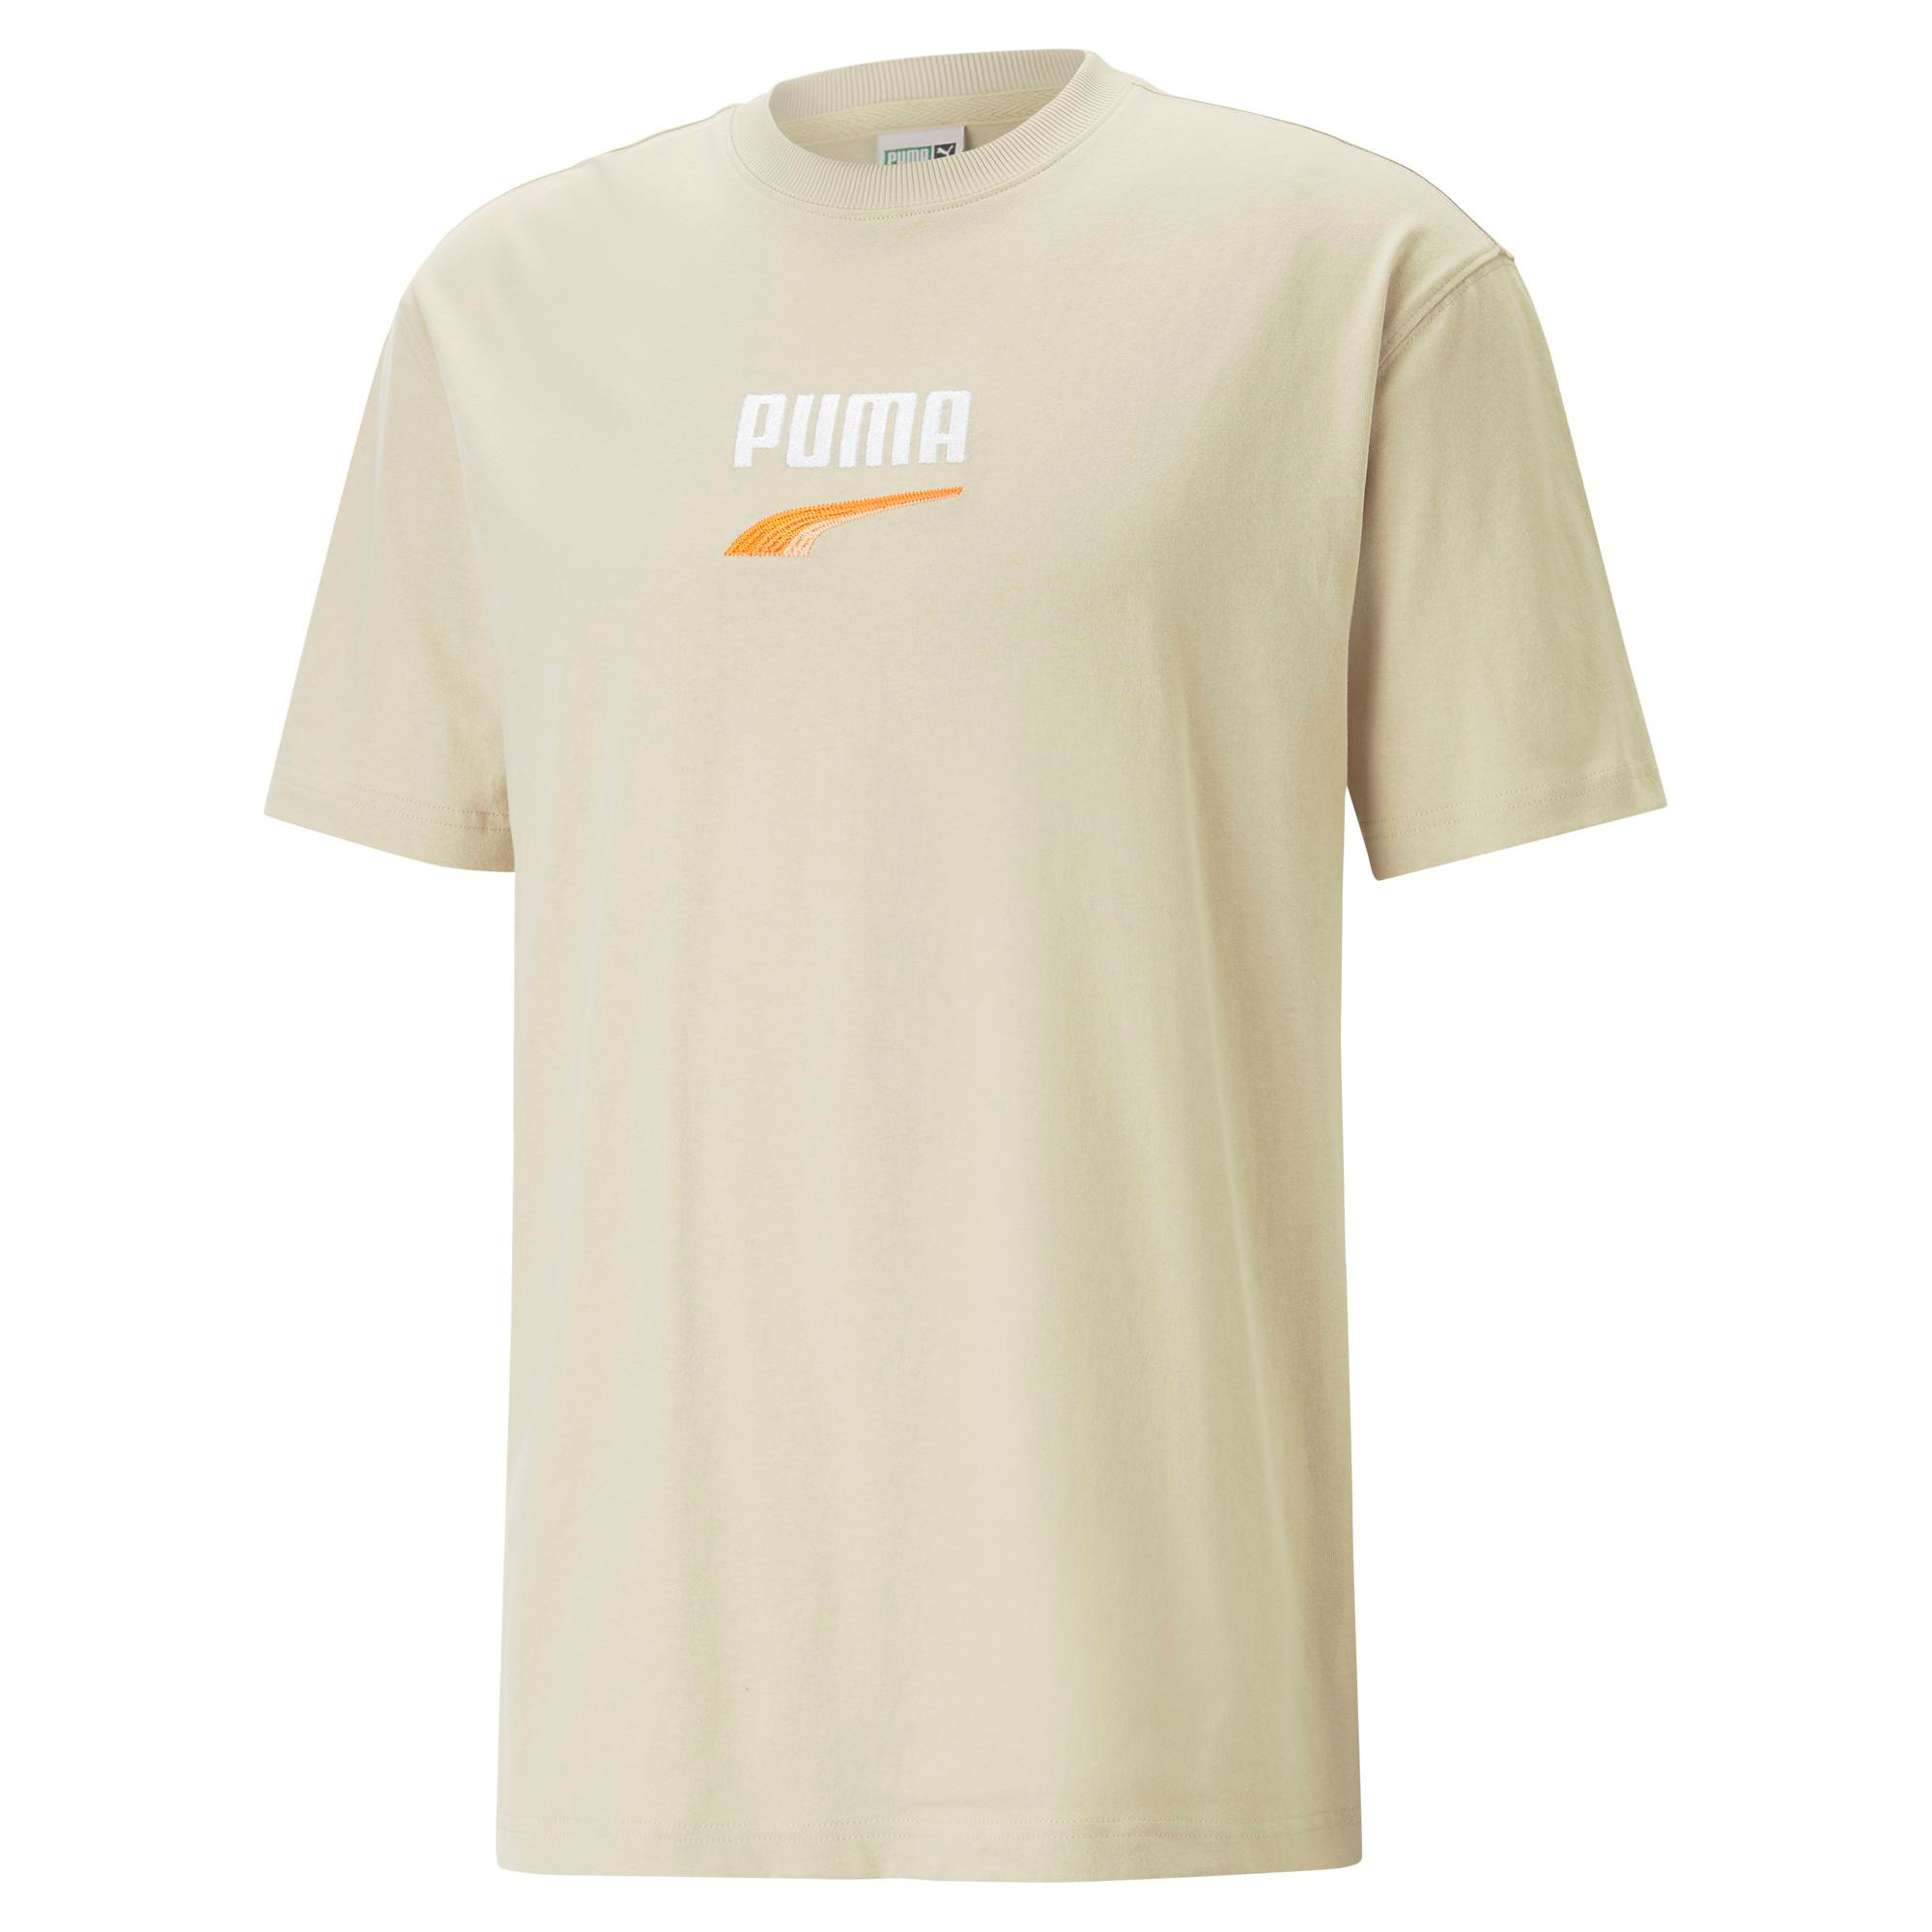 Puma - Cotton T-shirt with logo, Light Beige, large image number 0